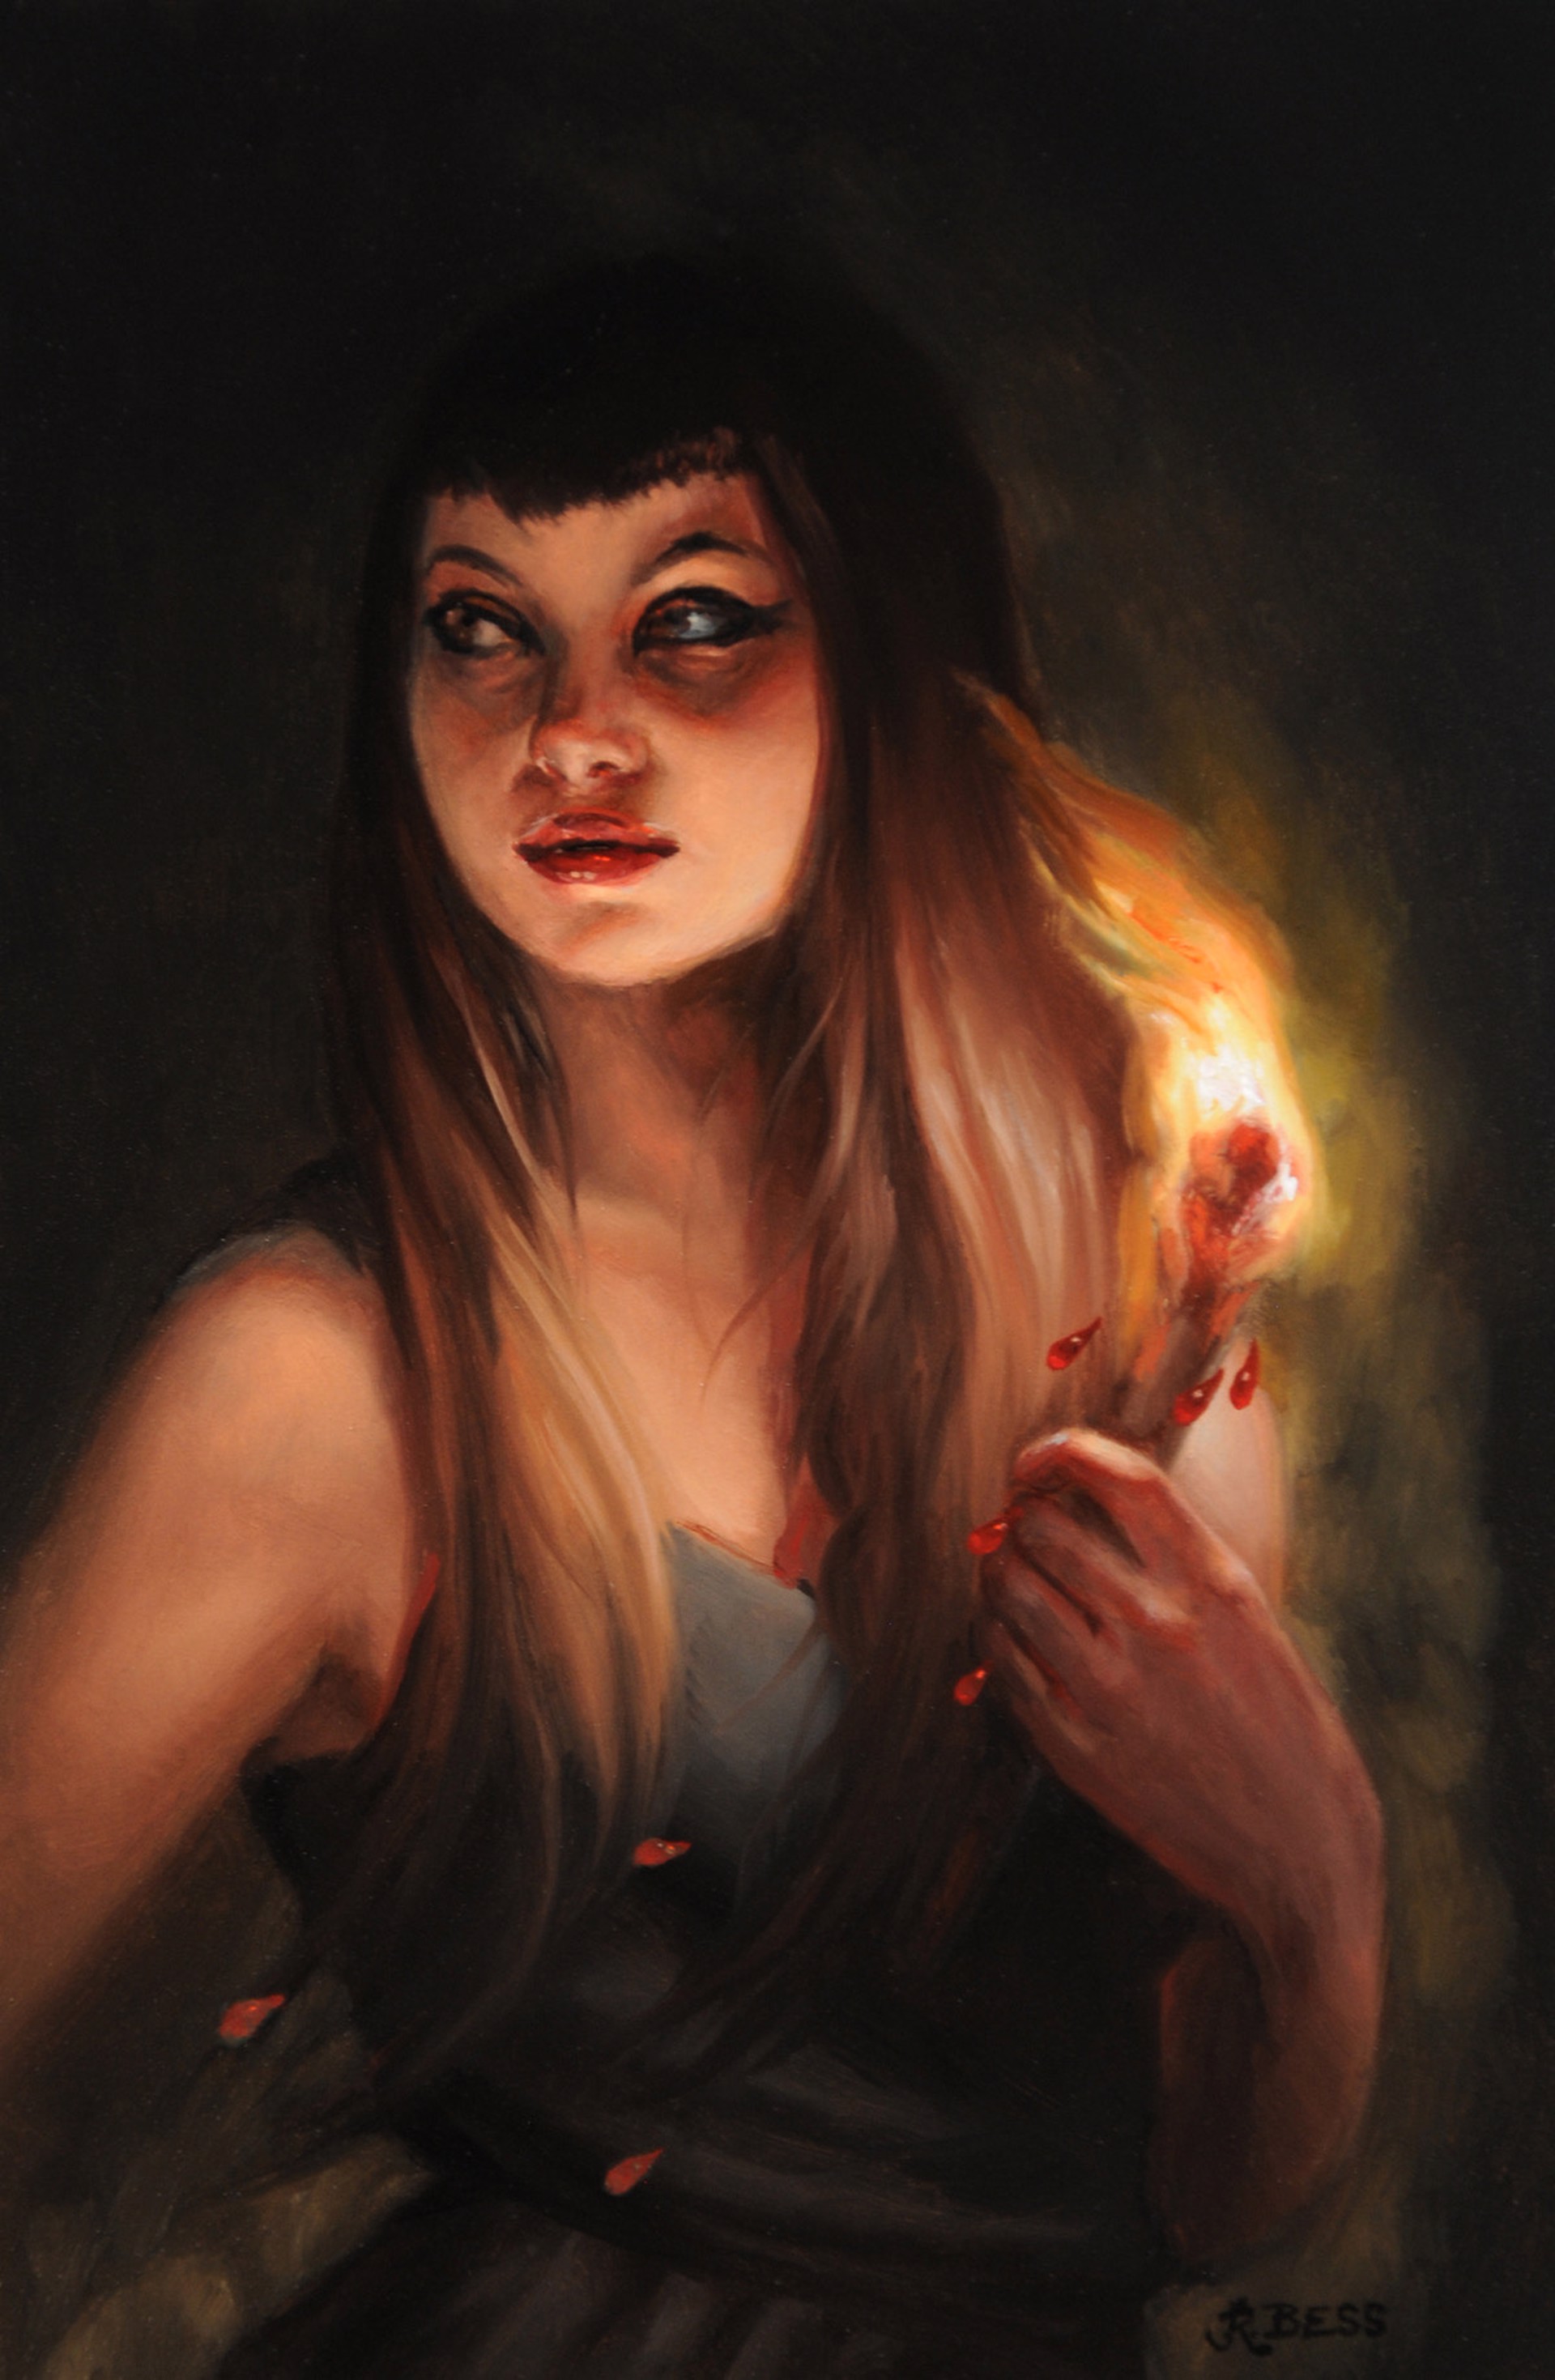 Blood Fire by Rachel Bess